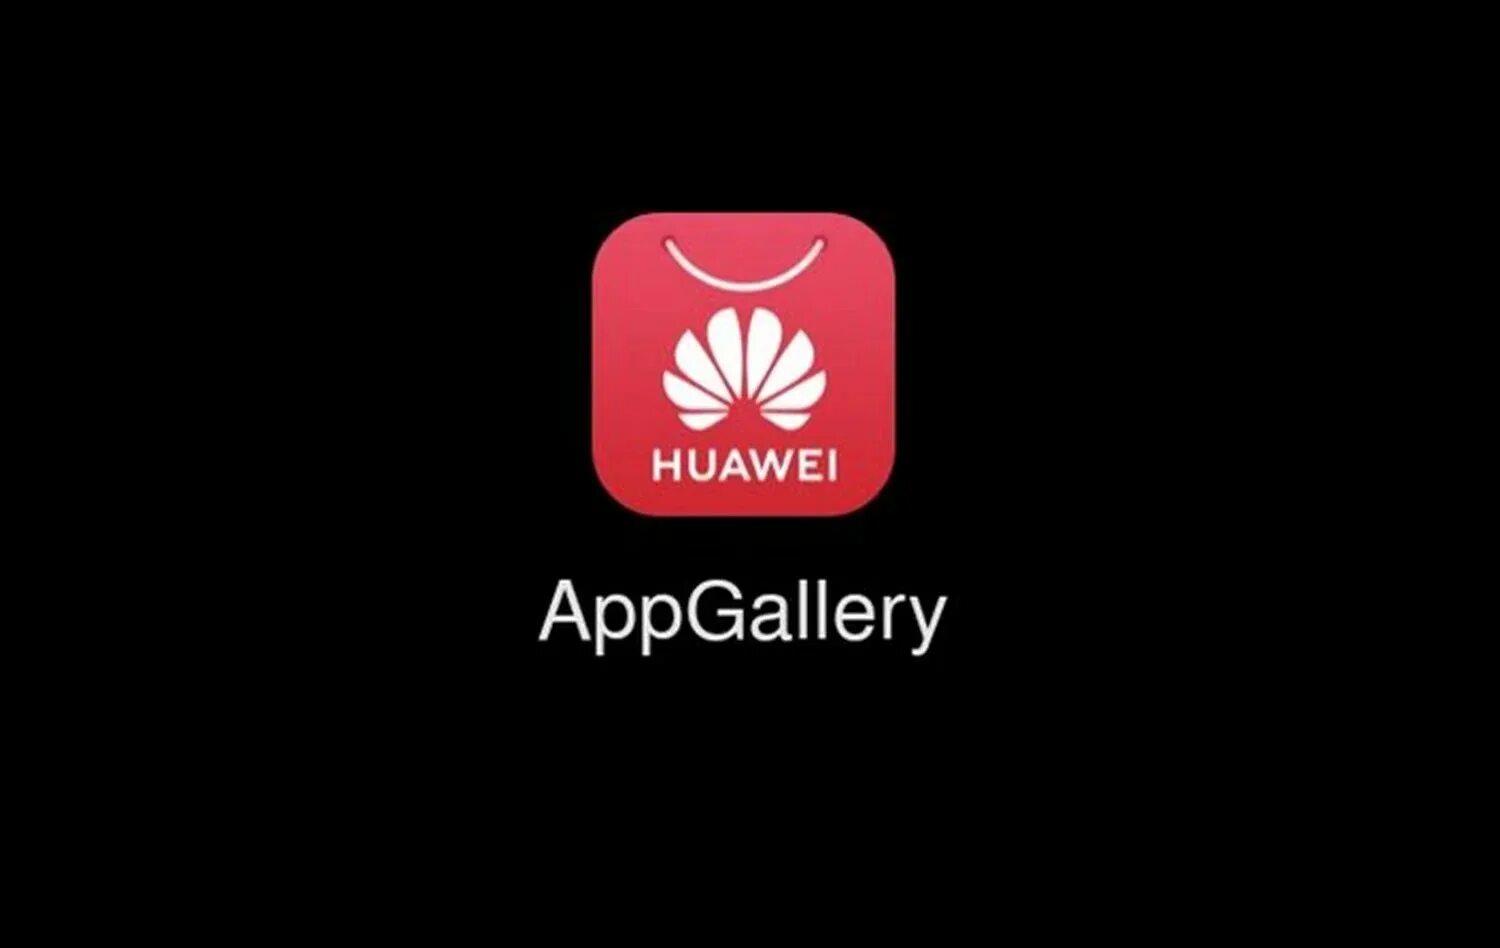 Appgallery google play. Huawei app Gallery значок. Приложения Хуавей APPGALLERY. Апп галерея Хуавей. Huawei магазин приложений.